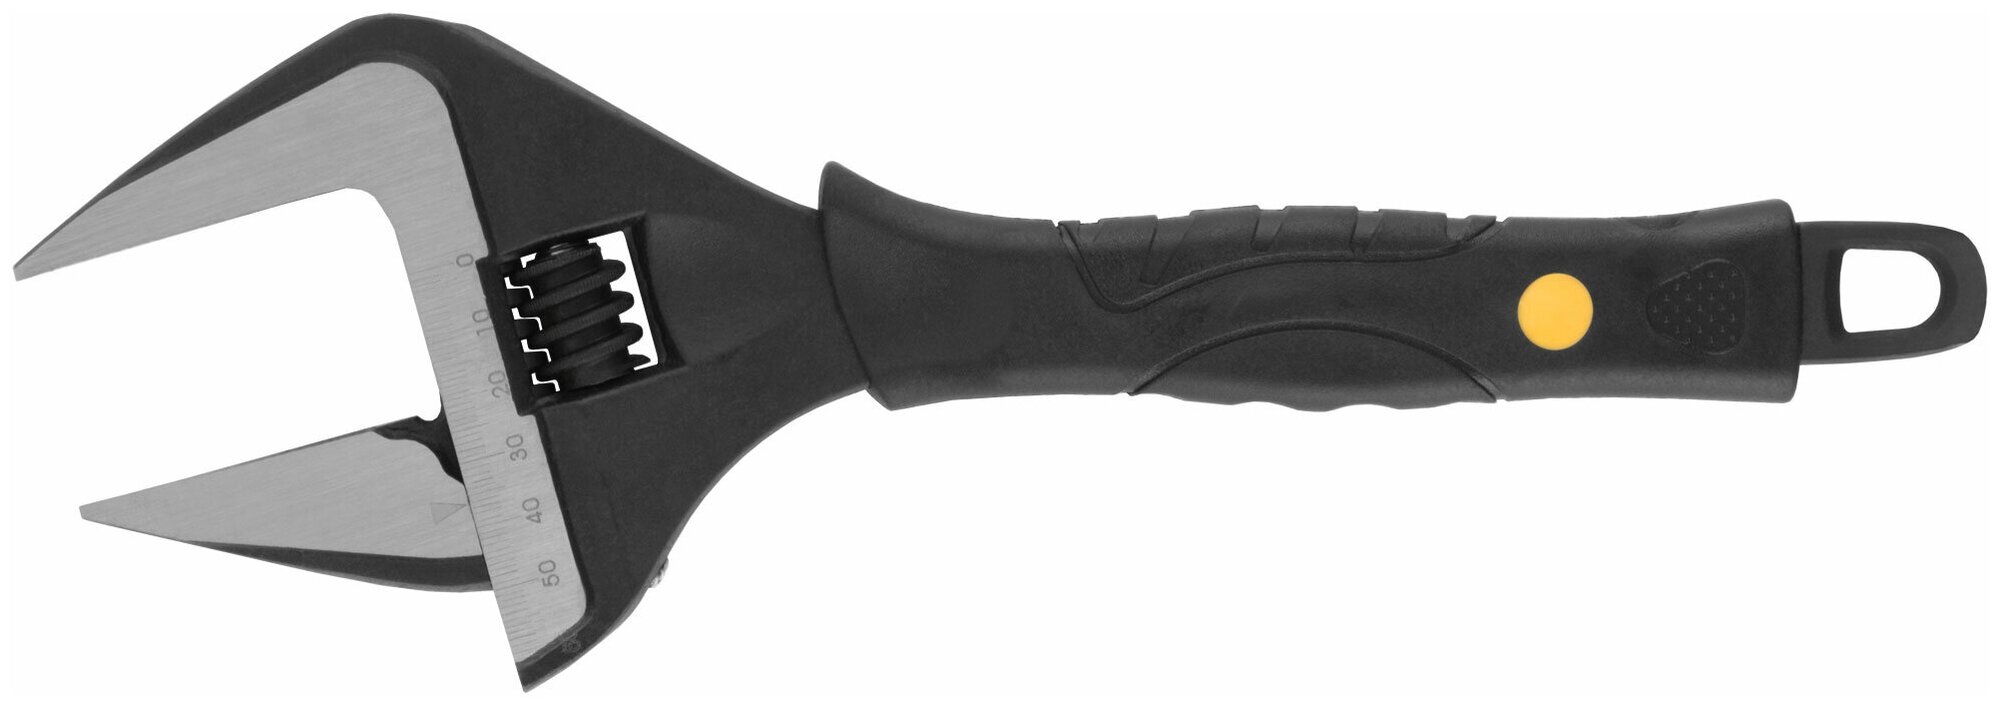 Ключ разводной "Контур", узкие губки, шкала, экстра увелич. захват, ПВХ накладка на ручку 300 мм ( 60 мм )